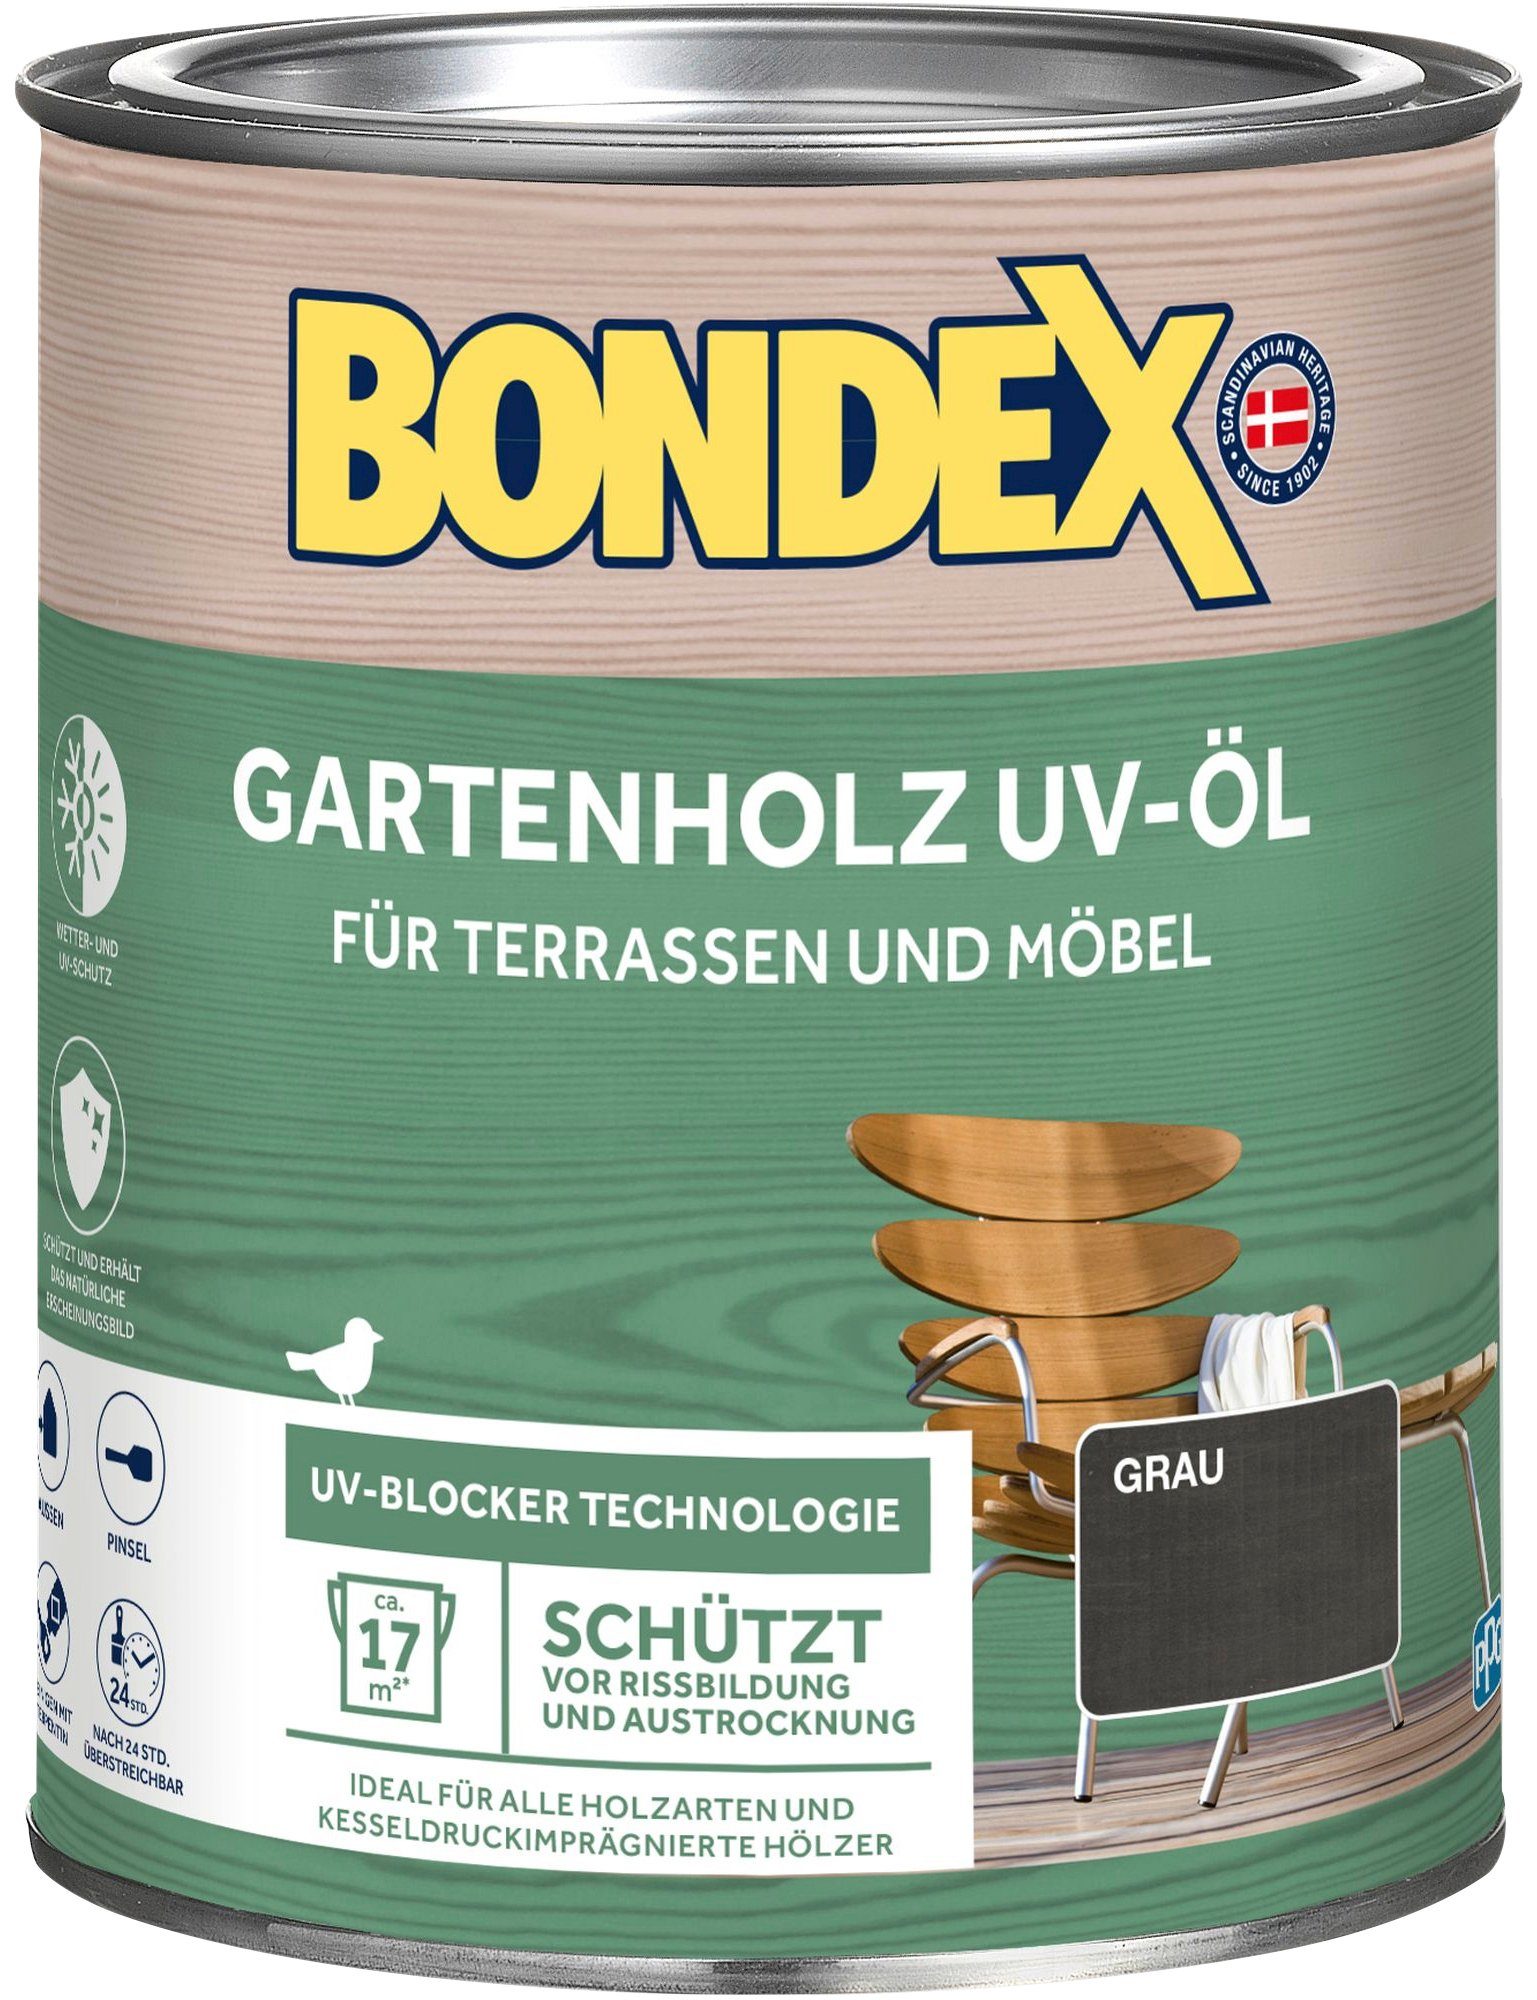 Bondex Holzöl GARTENHOLZ UV-ÖL, Farblos, 0,75 Liter Inhalt grau